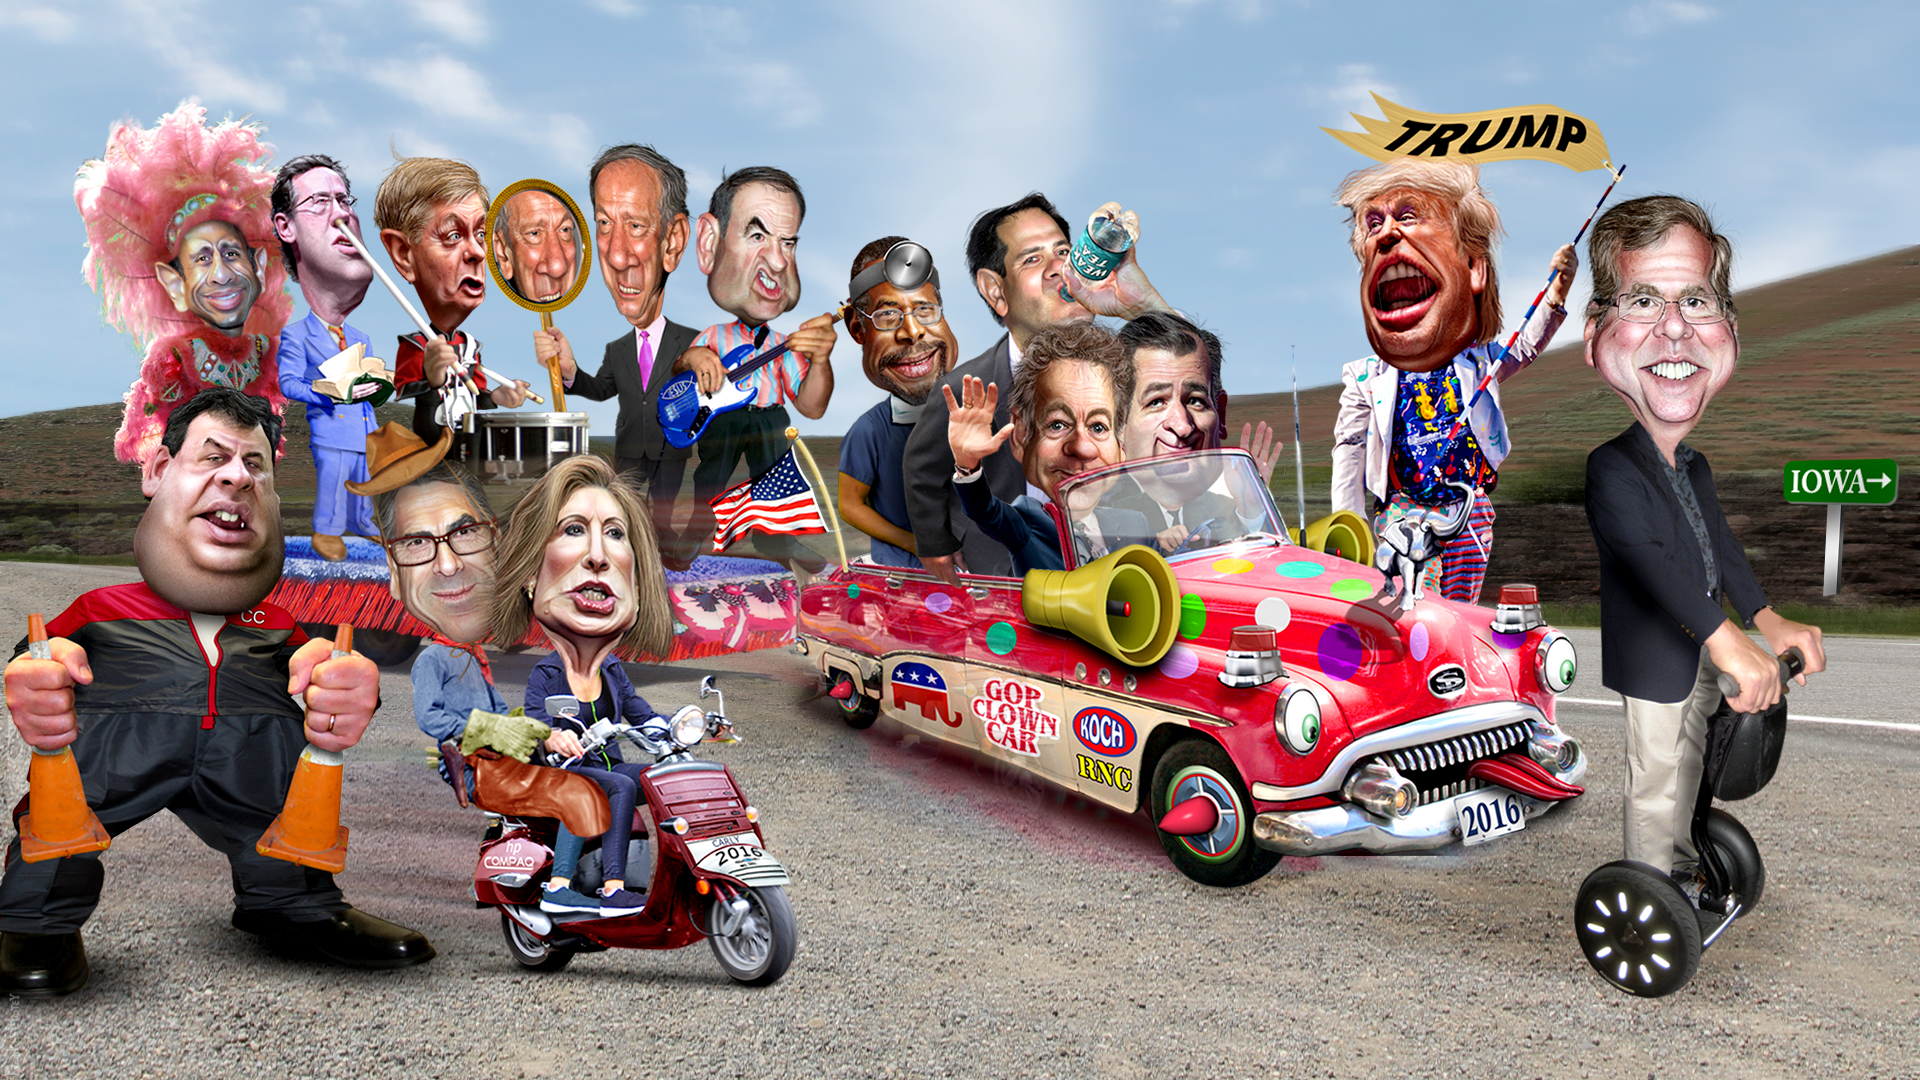 2016 Republican Clown Car Parade - Christie Joins the Menagerie